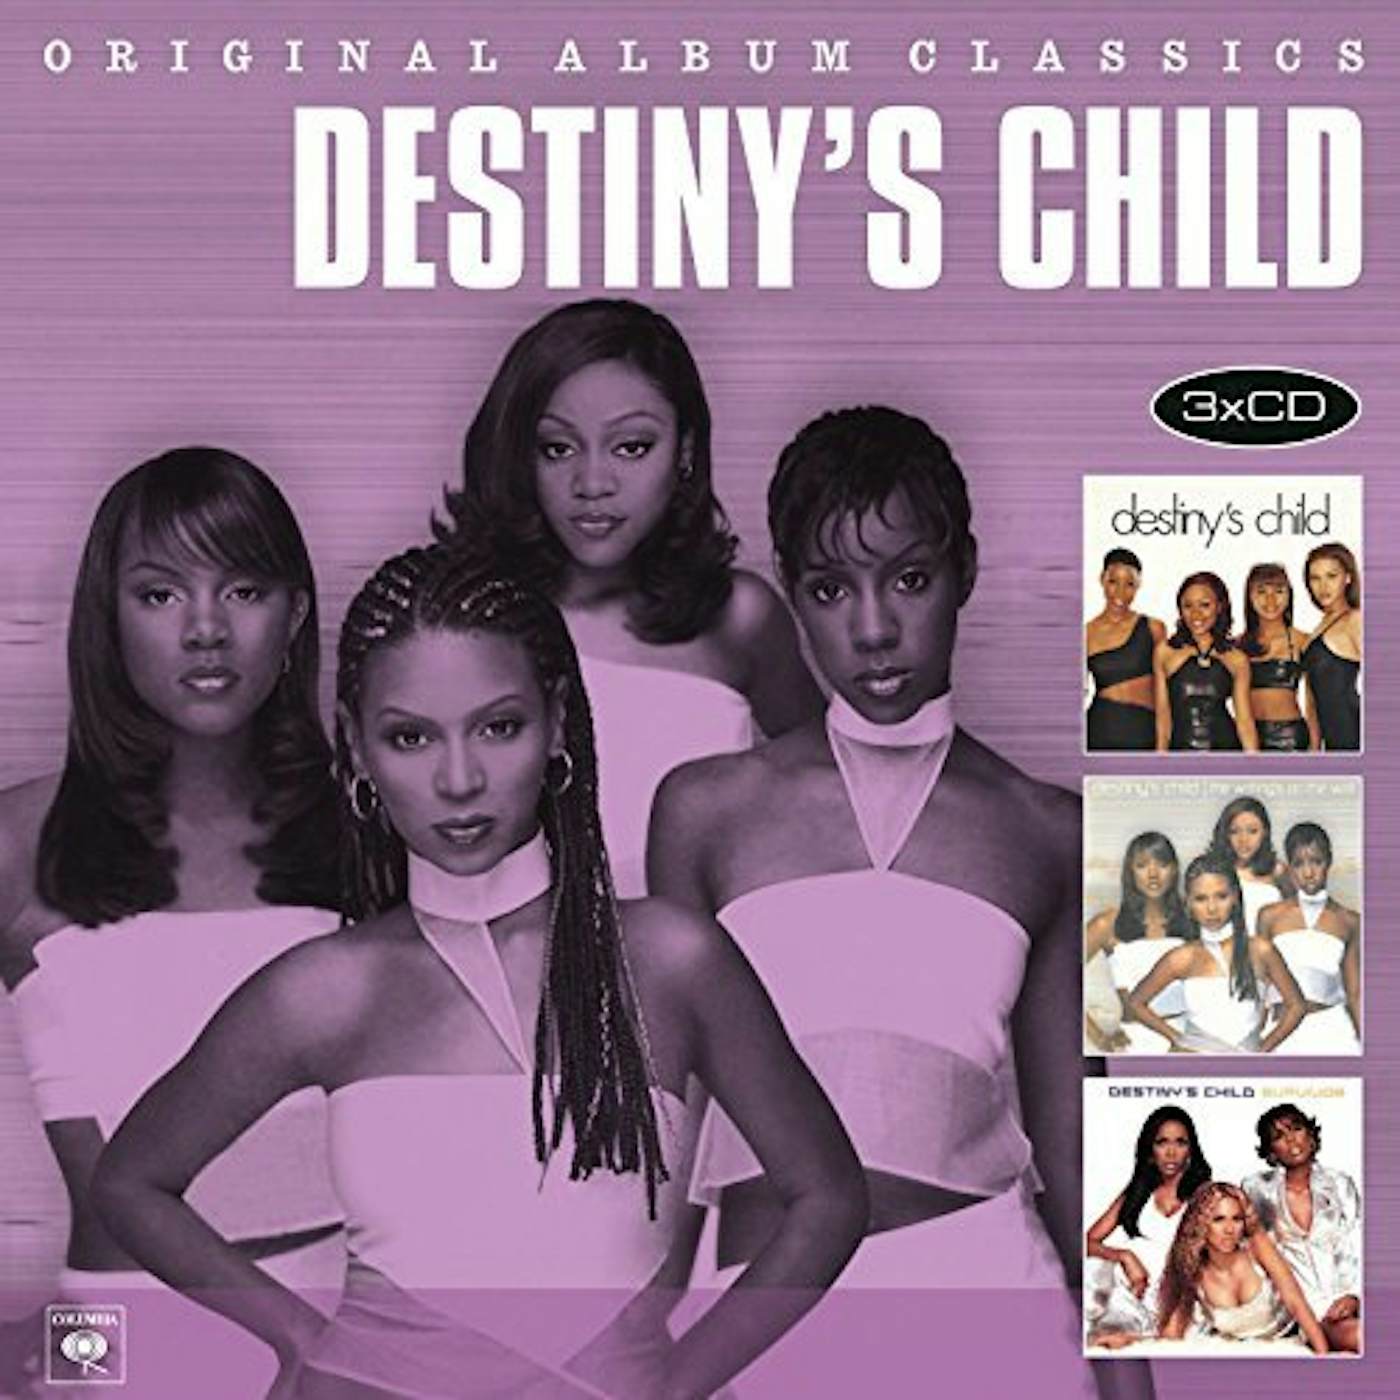 Destiny's Child ORIGINAL ALBUM CLASSICS CD